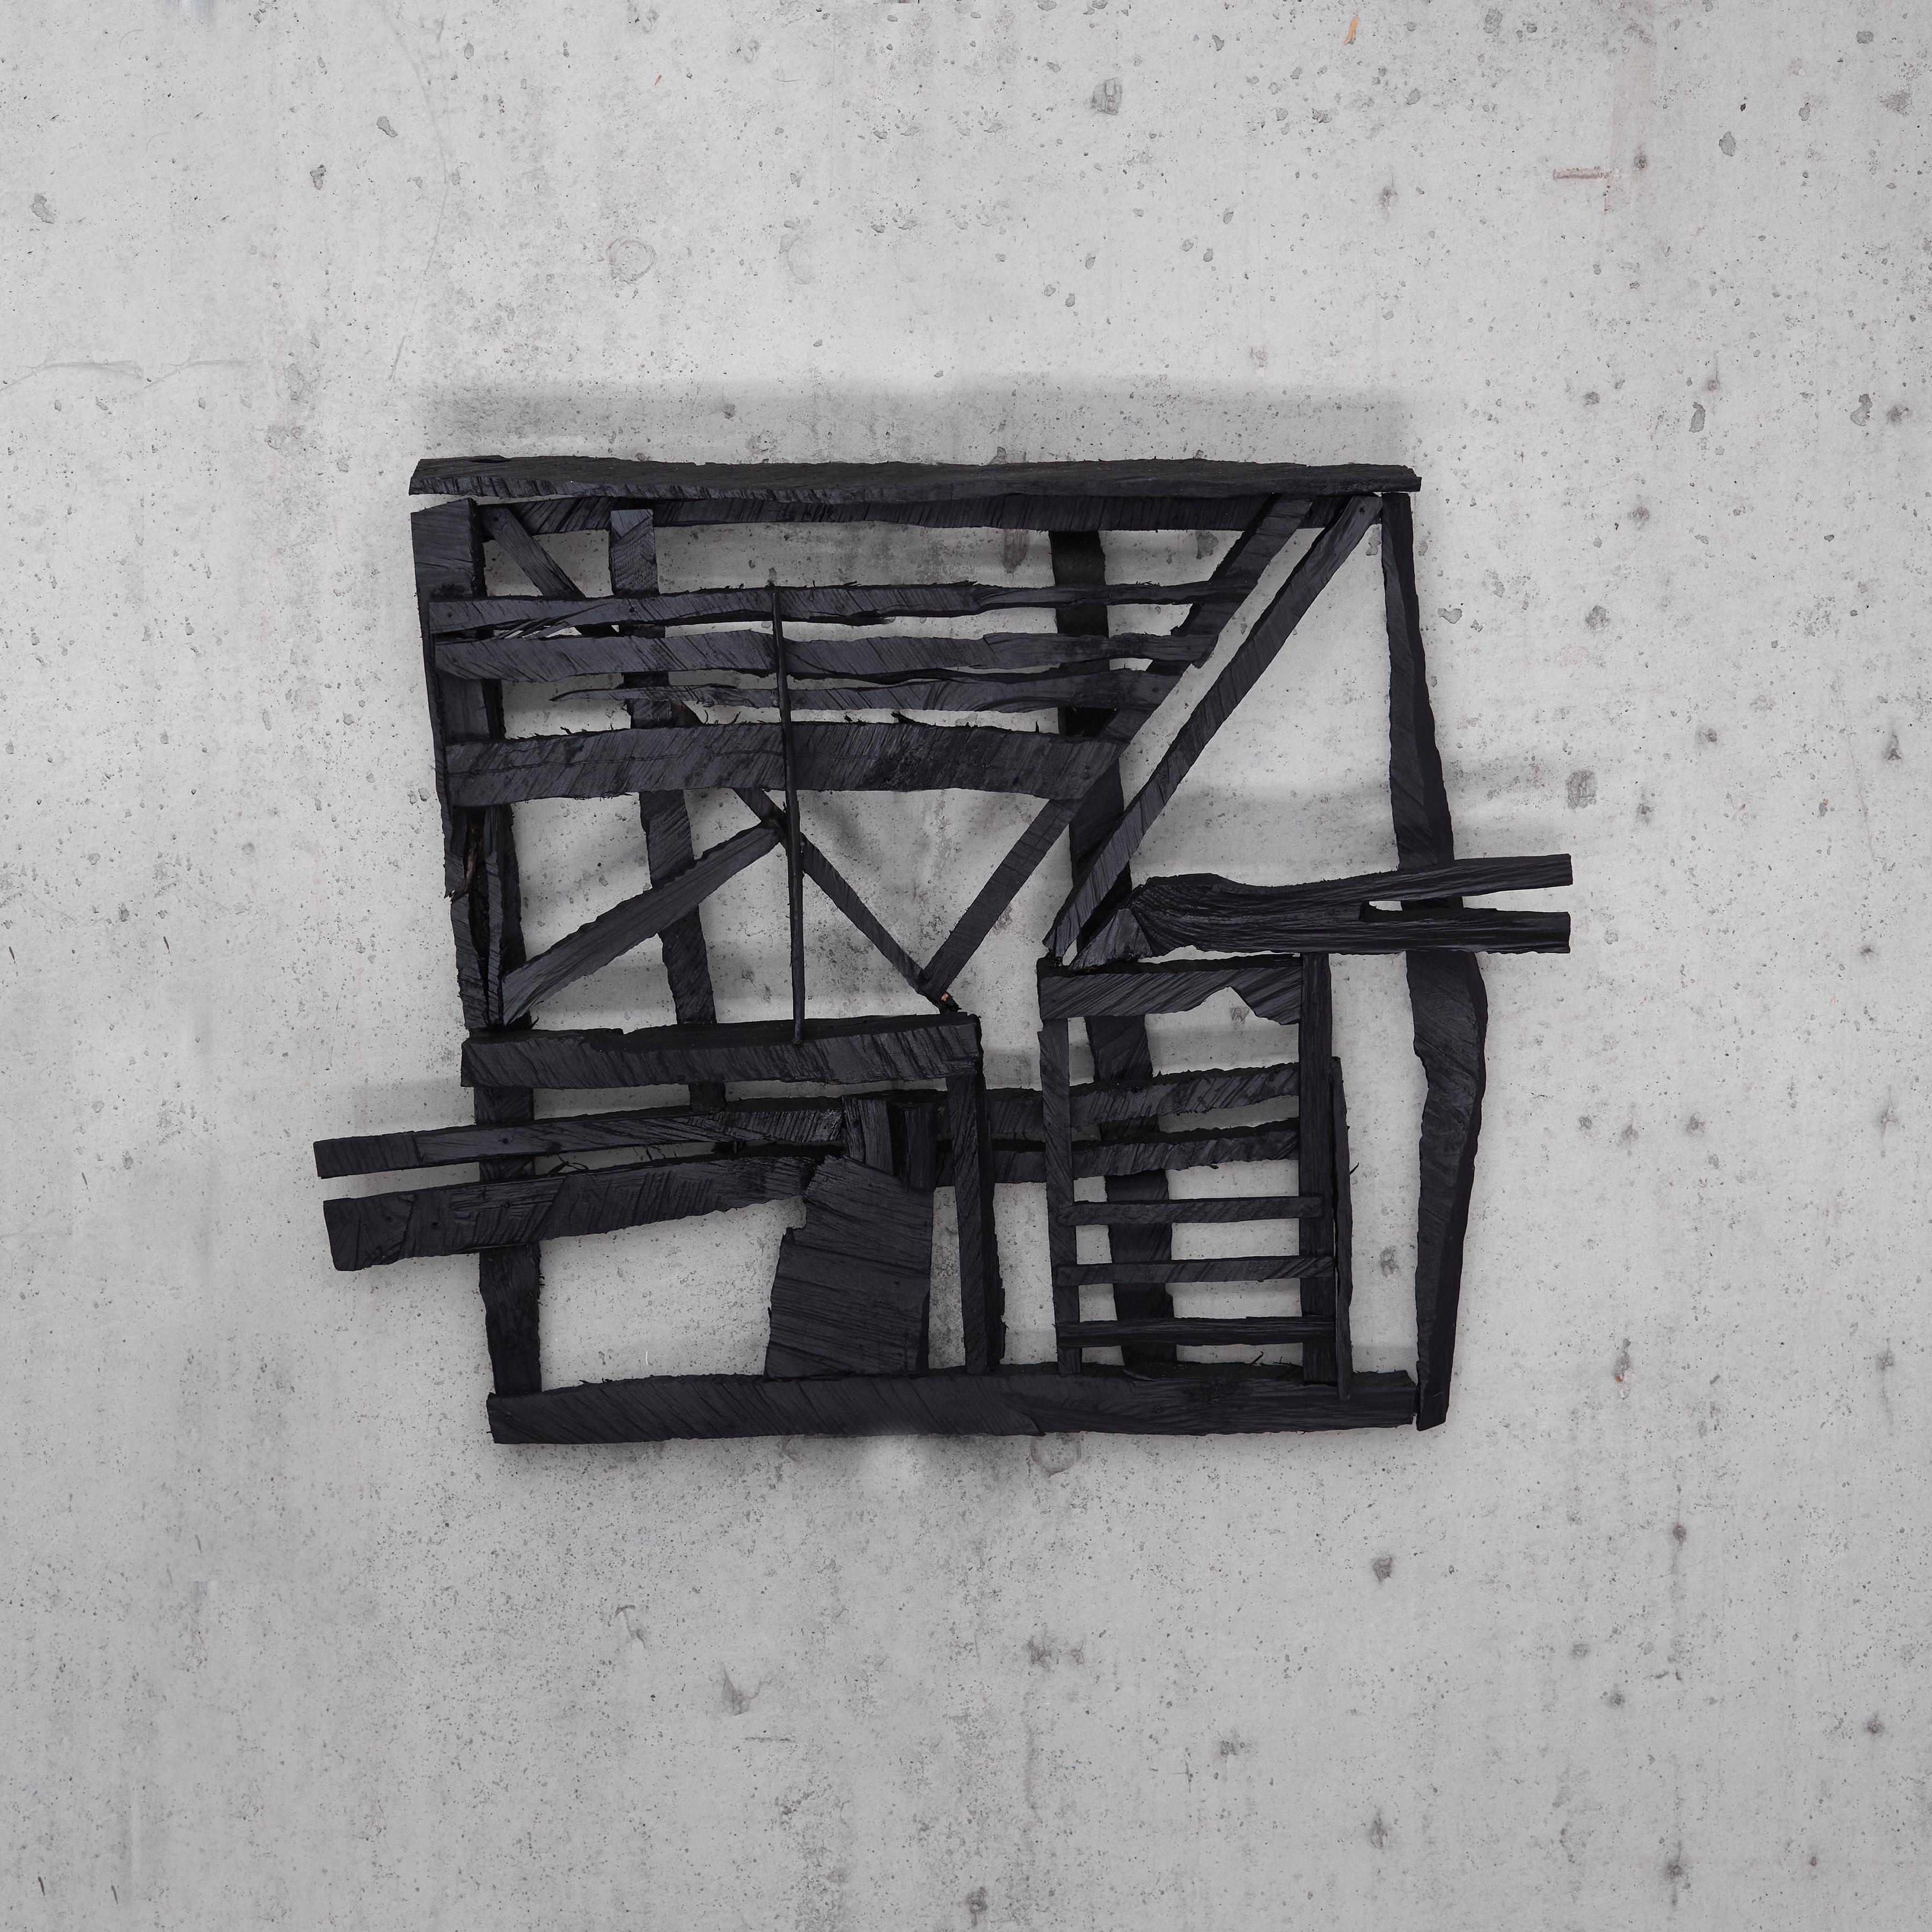 Joe Sultan Abstract Sculpture - 2 Dollar Pistol, black abstract geometric wooden sculpture